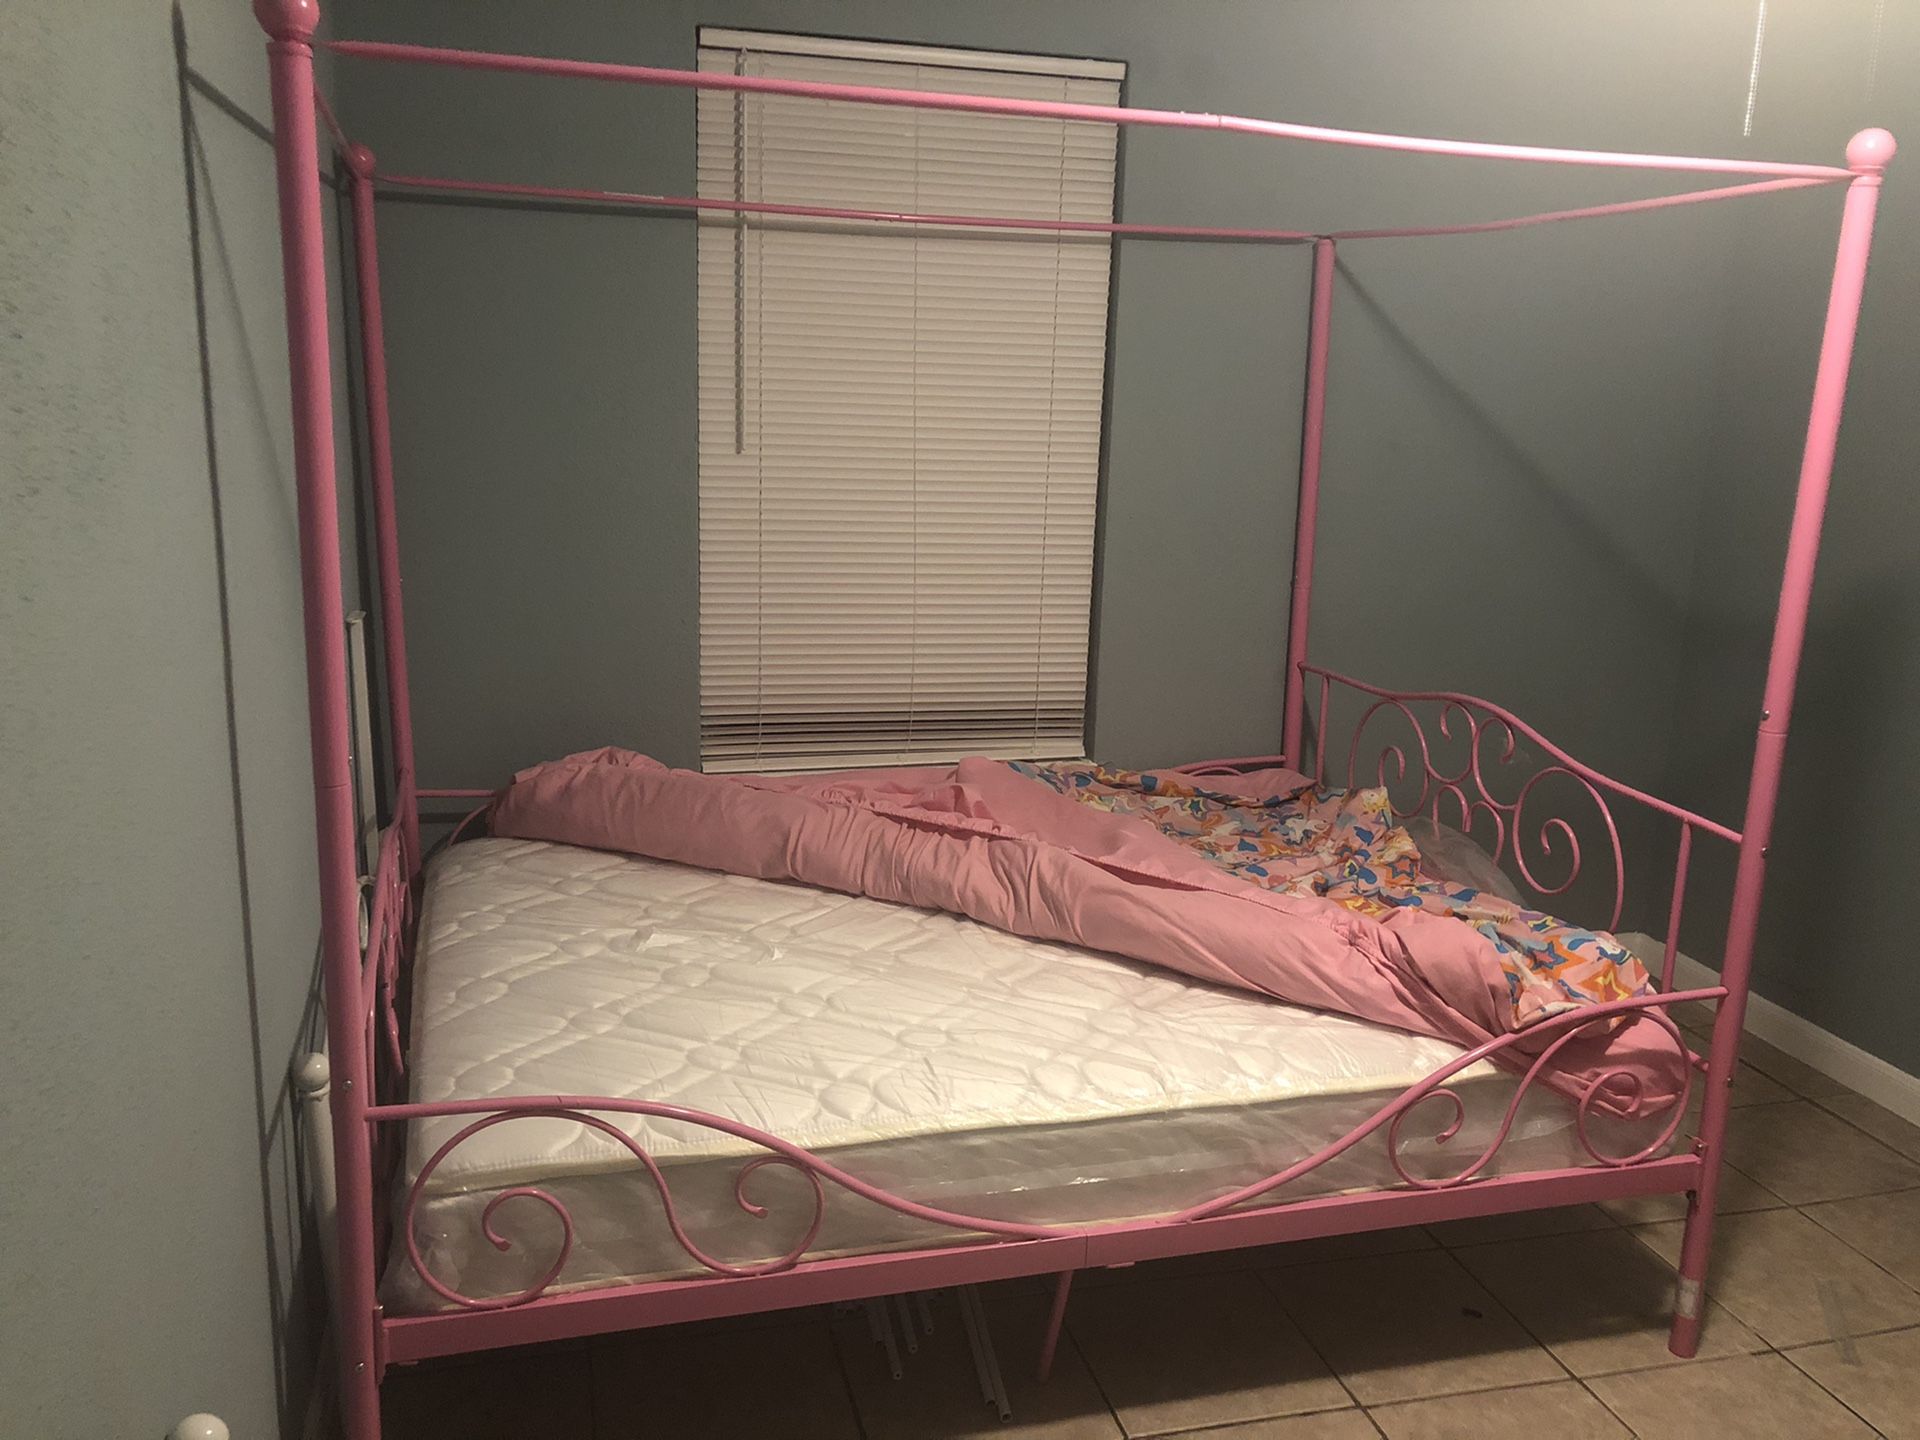 Full-size bed & mattress